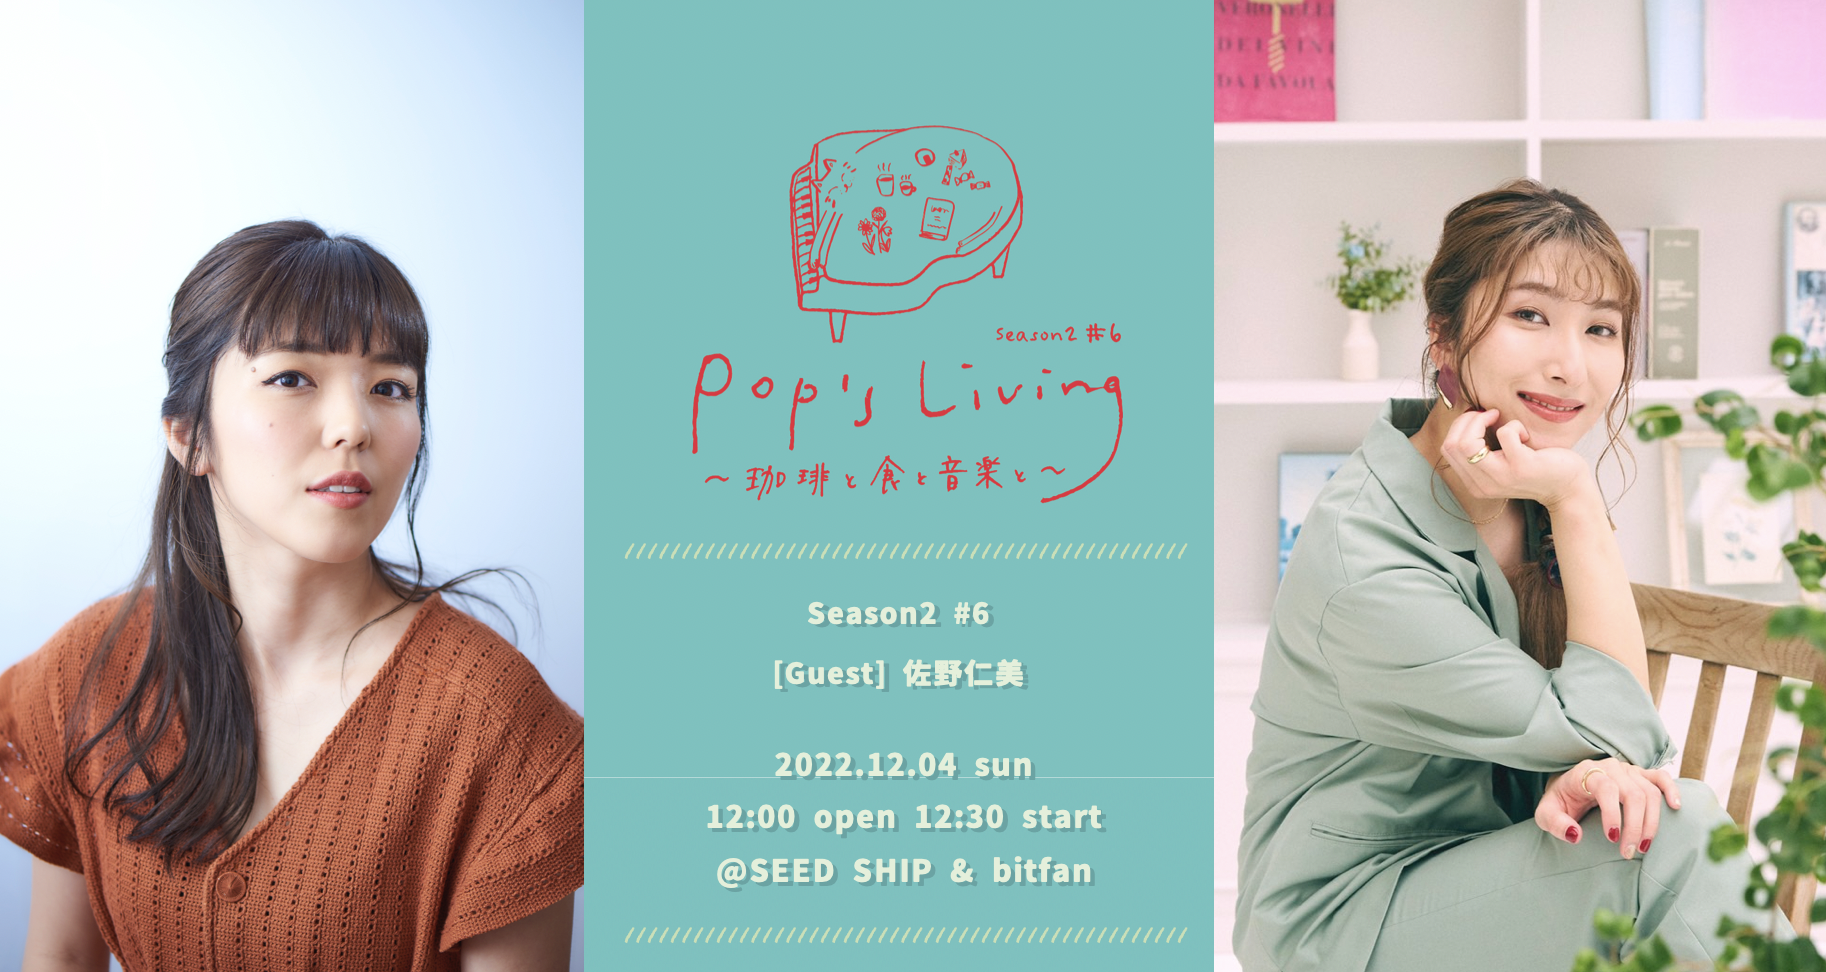 【Pop's Living 〜珈琲と食と音楽と〜】 Season2 #6 佐野仁美